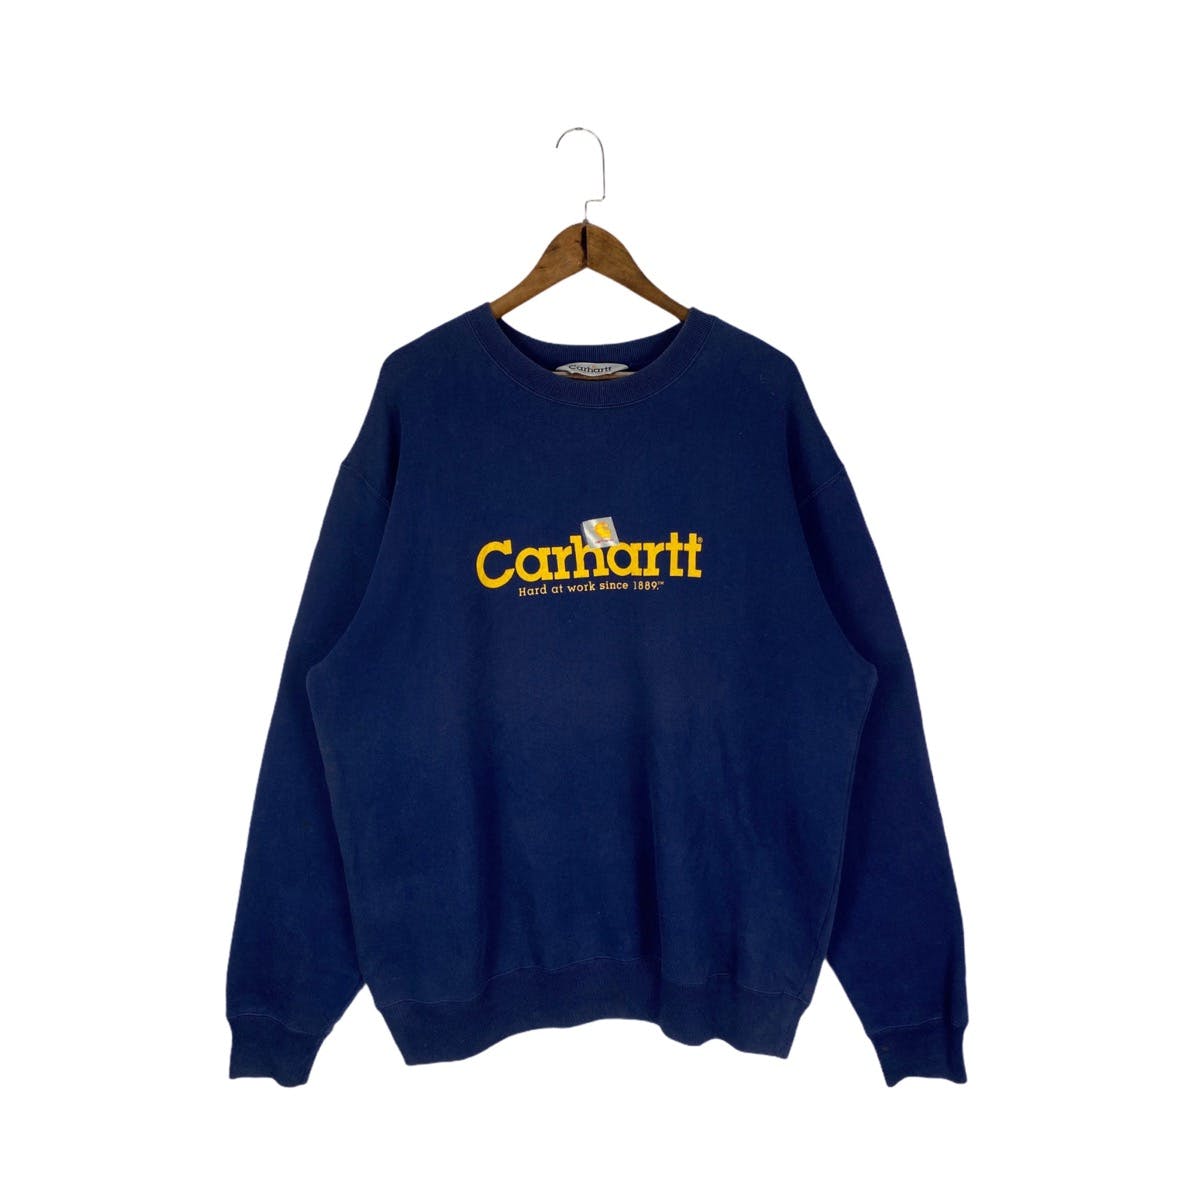 Vintage 90s Carhartt Sweatshirt Crewneck - 1